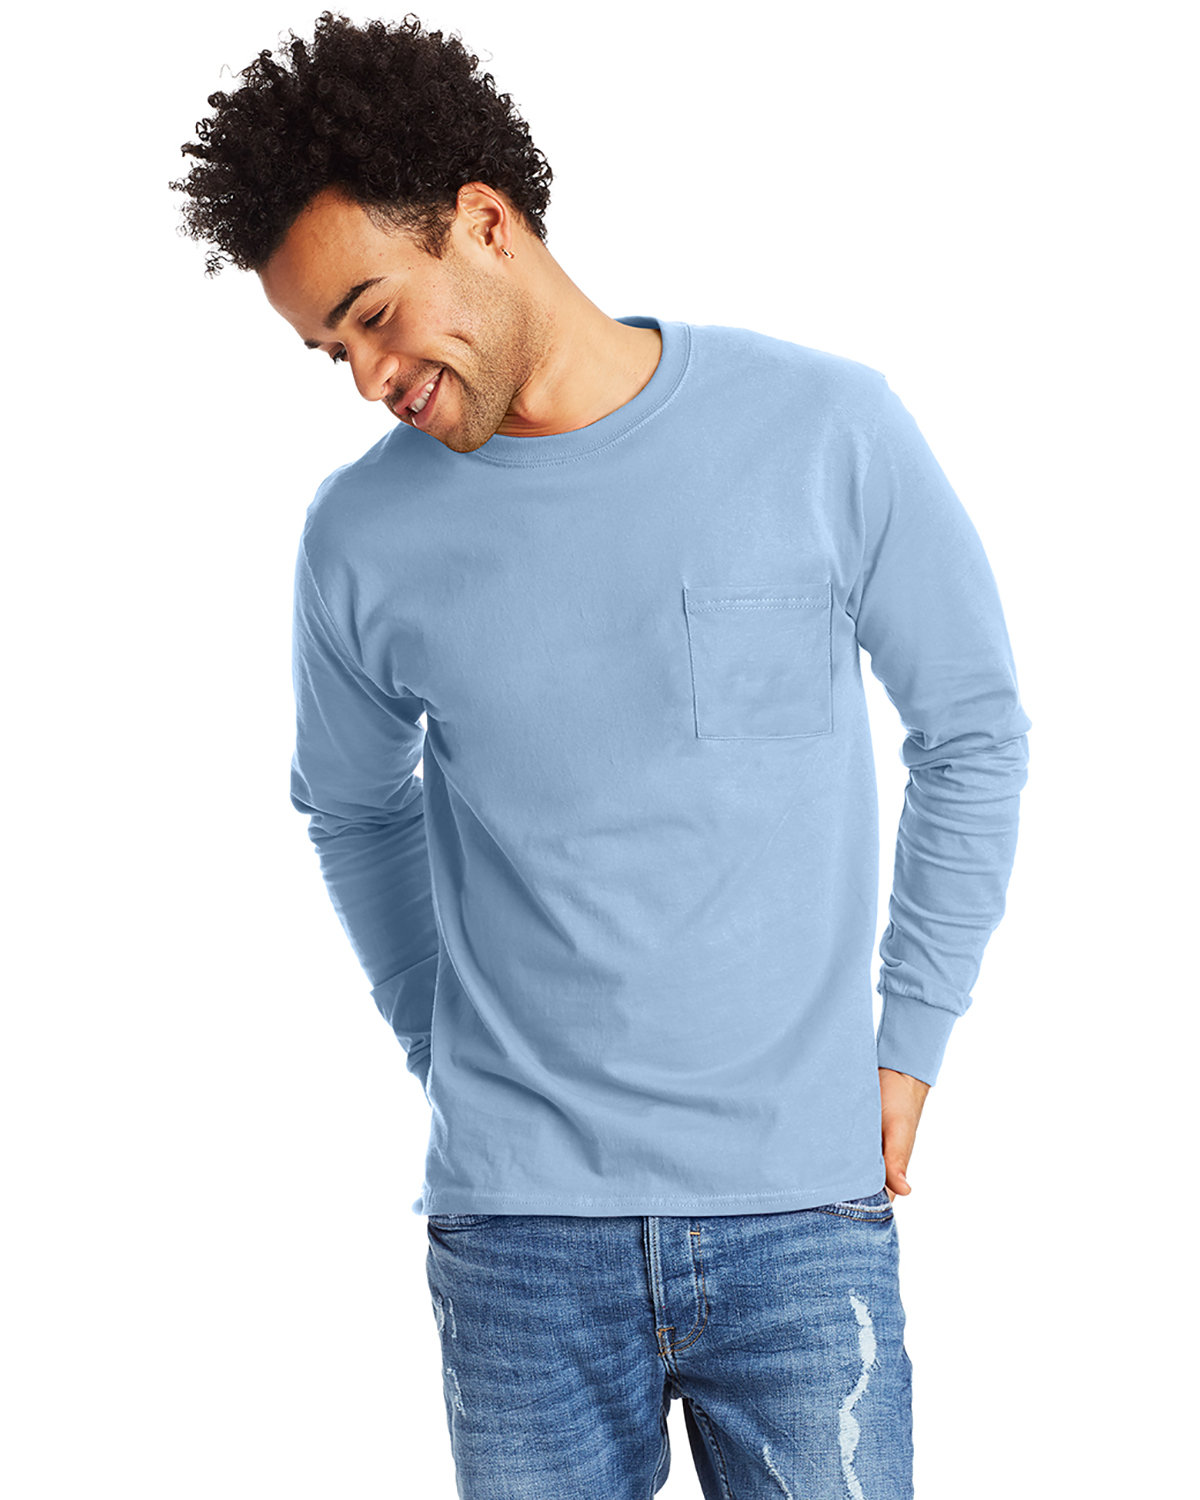 Hanes Men's Authentic-T Long-Sleeve Pocket T-Shirt LIGHT BLUE 